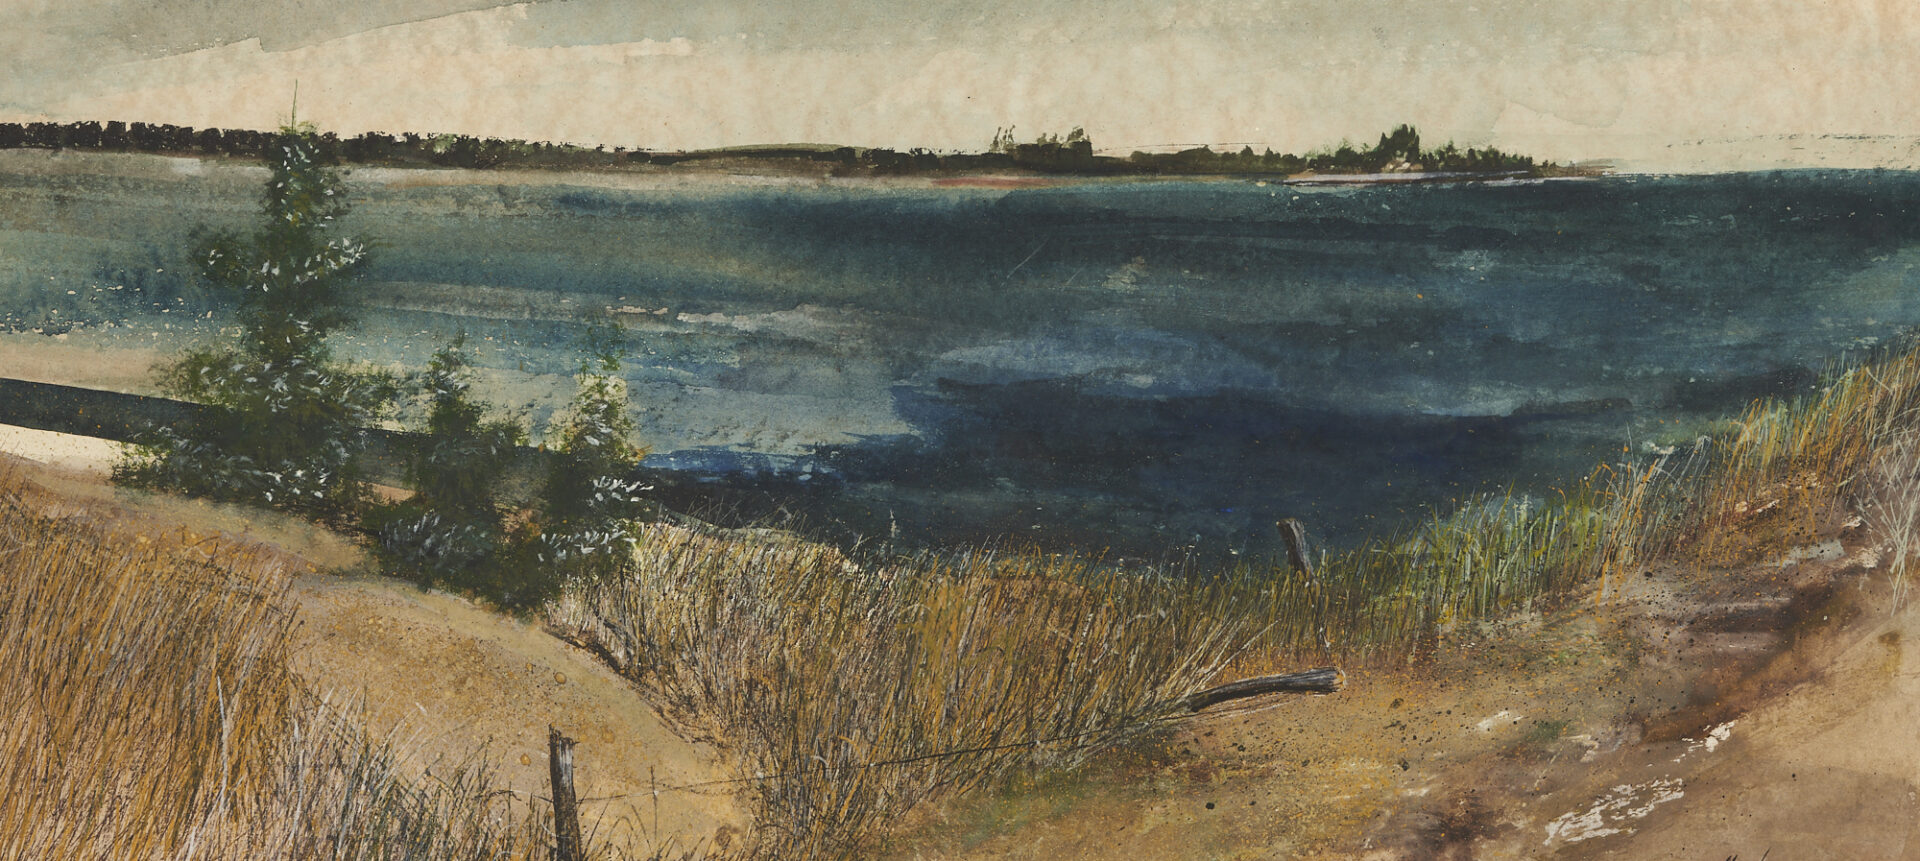 Lot 701: Watercolor Coastal Landscape Painting, Signed Carl '65